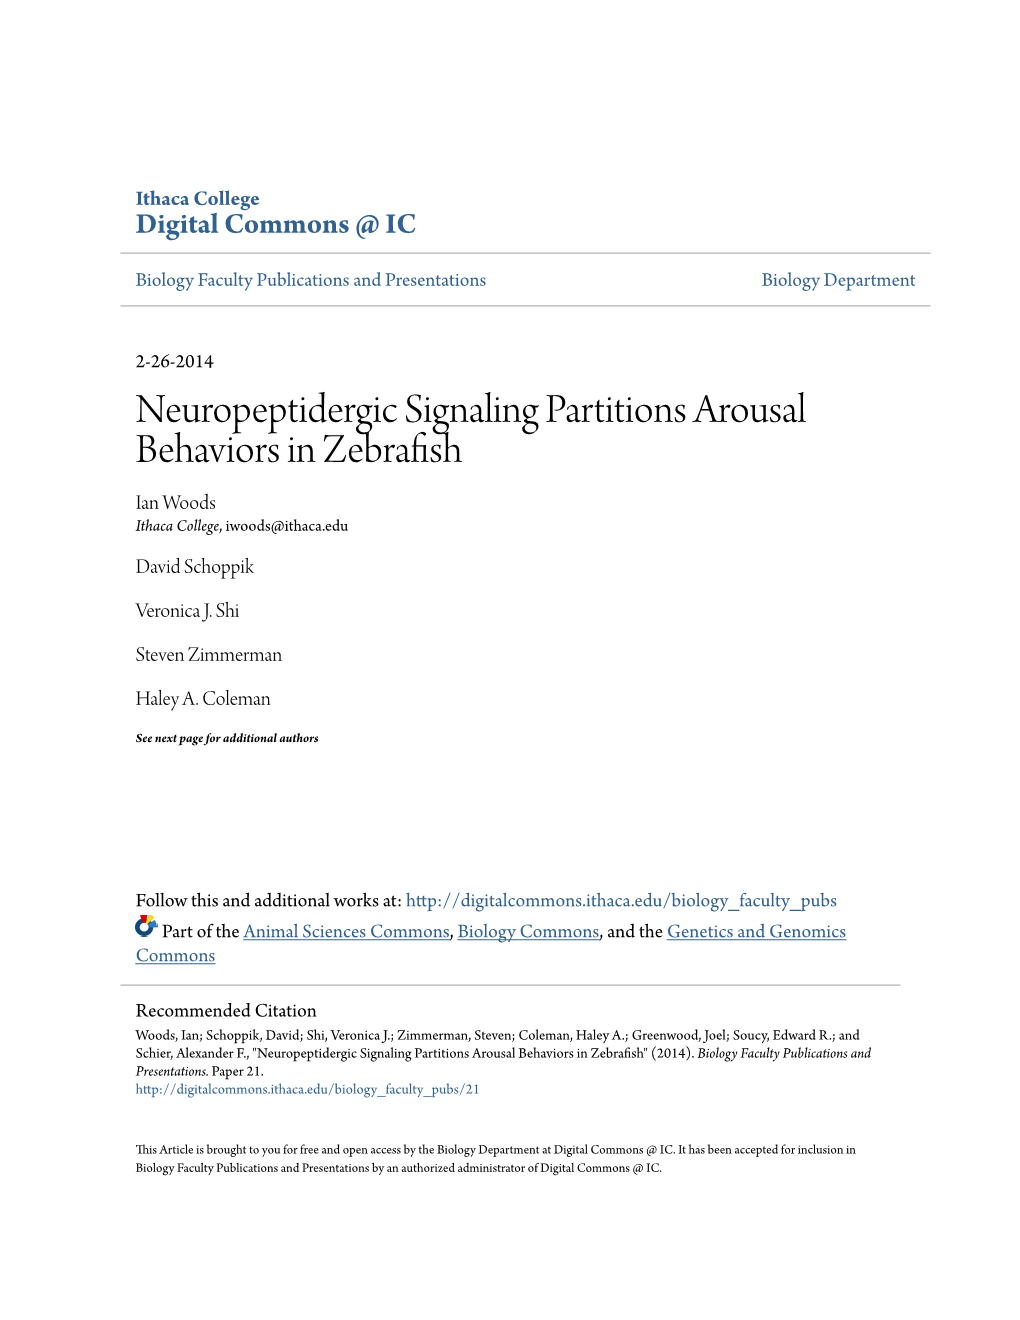 Neuropeptidergic Signaling Partitions Arousal Behaviors in Zebrafish Ian Woods Ithaca College, Iwoods@Ithaca.Edu